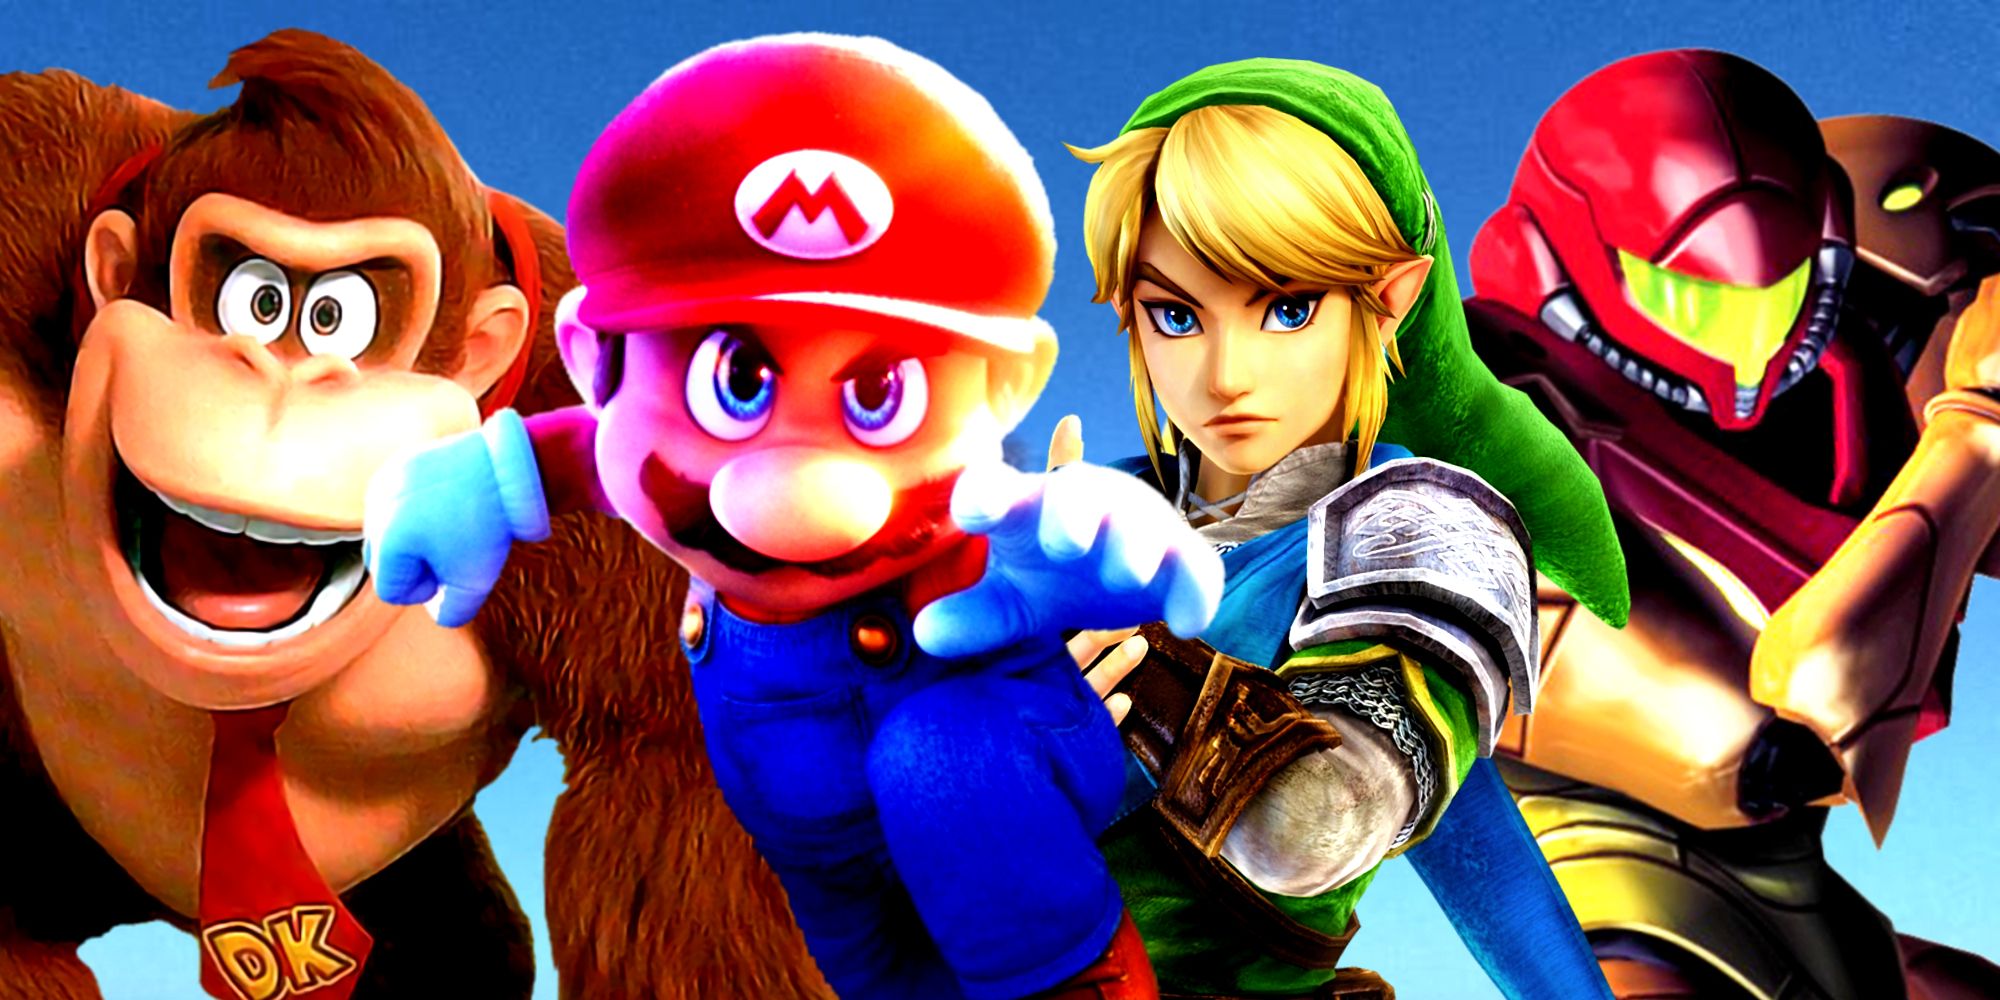 Mario, Link, Samus, and Donkey Kong in Nintendo's Movie Franchise